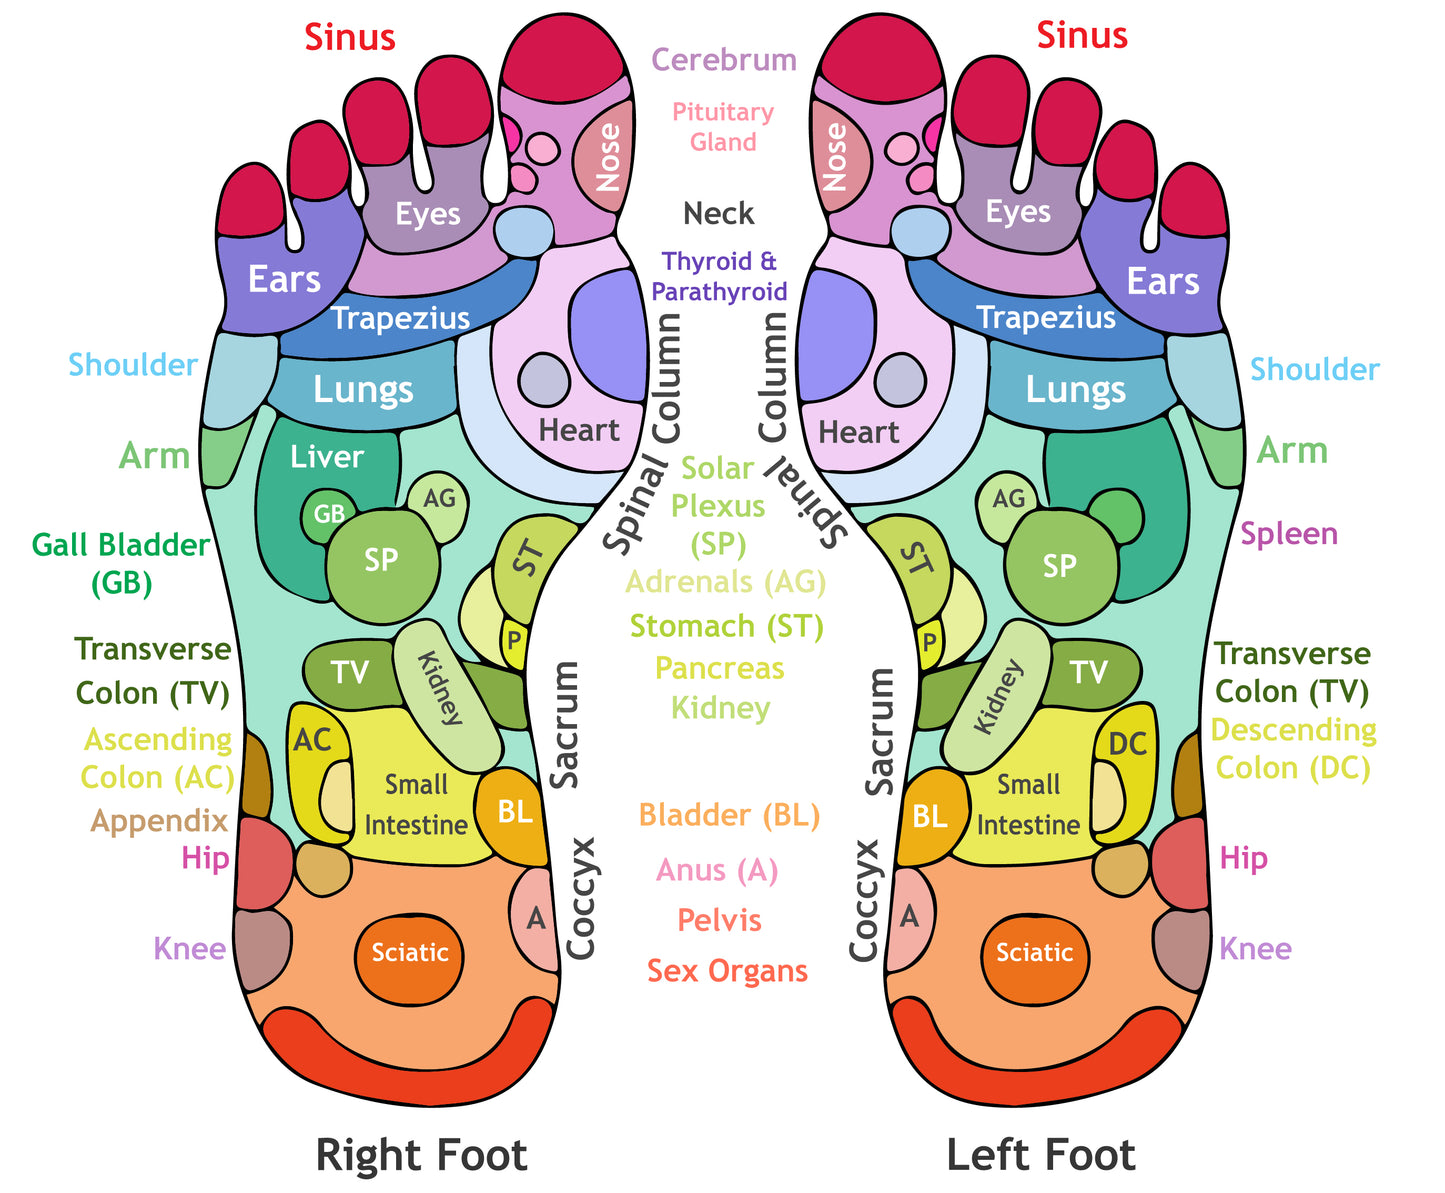 Centerworks Acupressure Foot Massage Mat